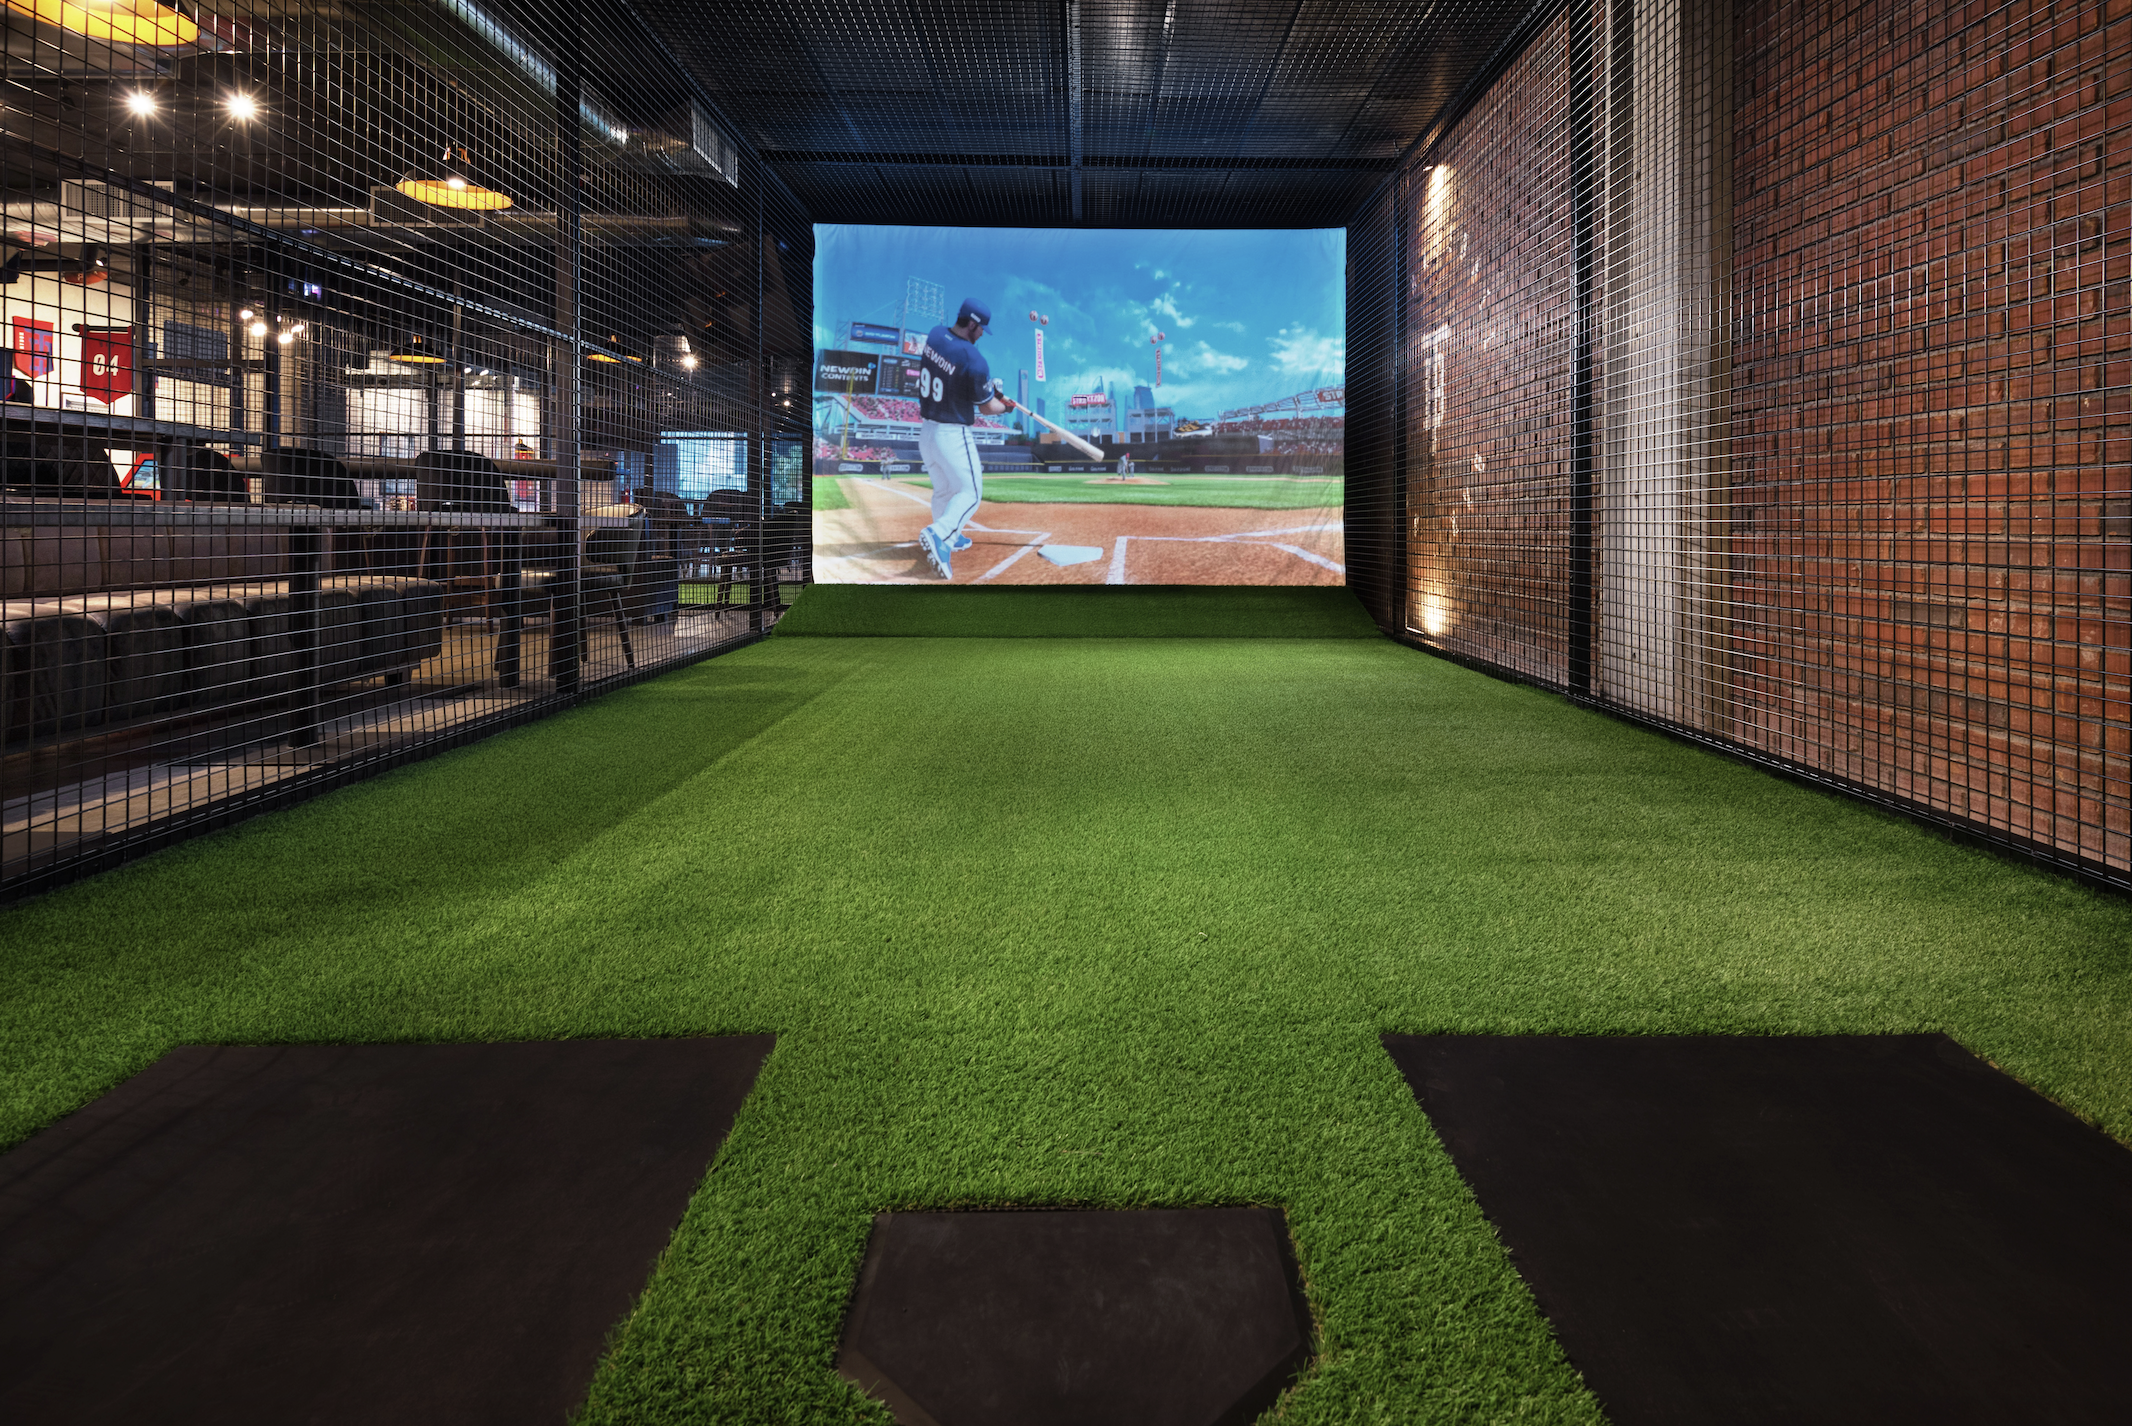 Immersive Baseball Simulator BatBox is Opening First U.S